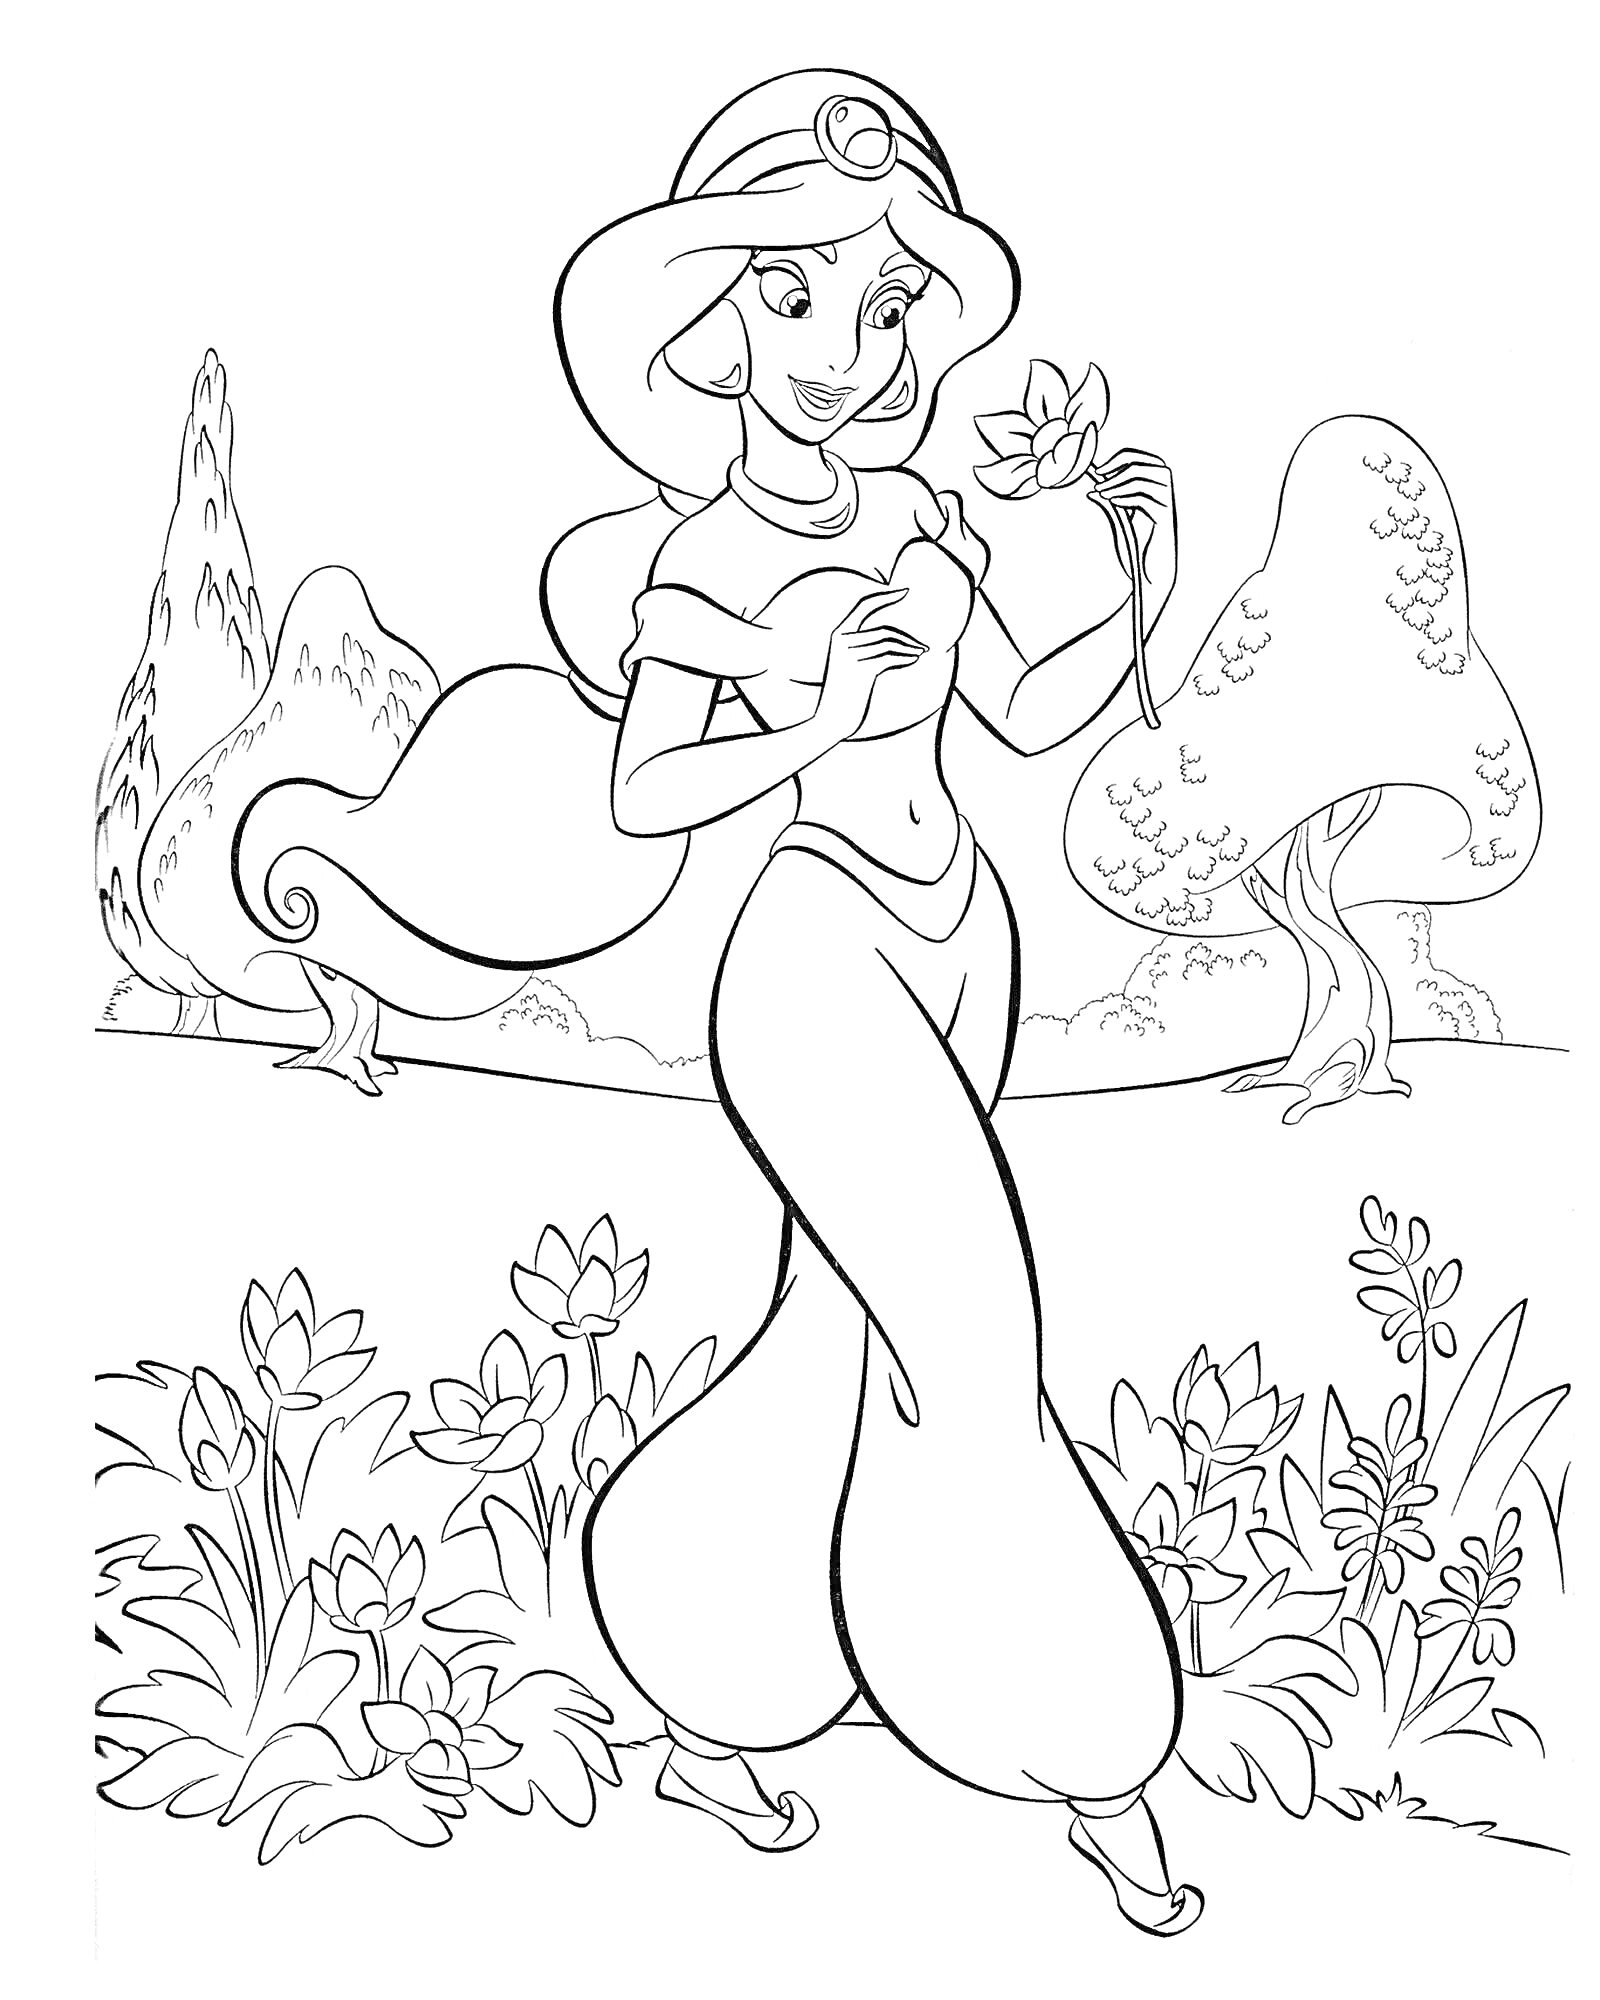 Раскраска Принцесса в саду с цветами жасмина